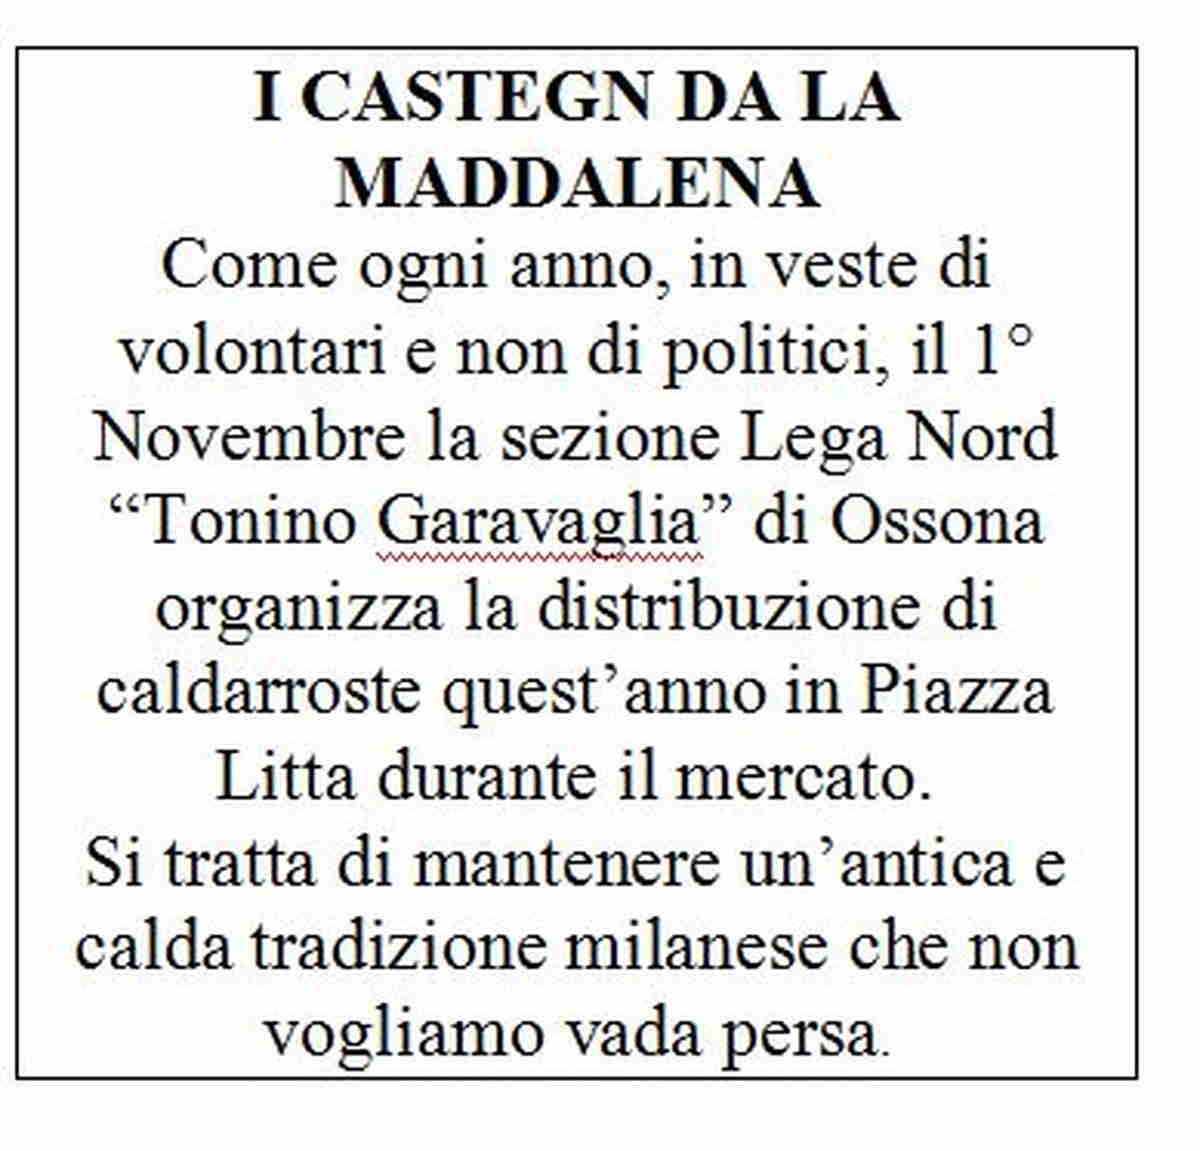 Ossona, 1 novembre: I castegn da la Maddalena